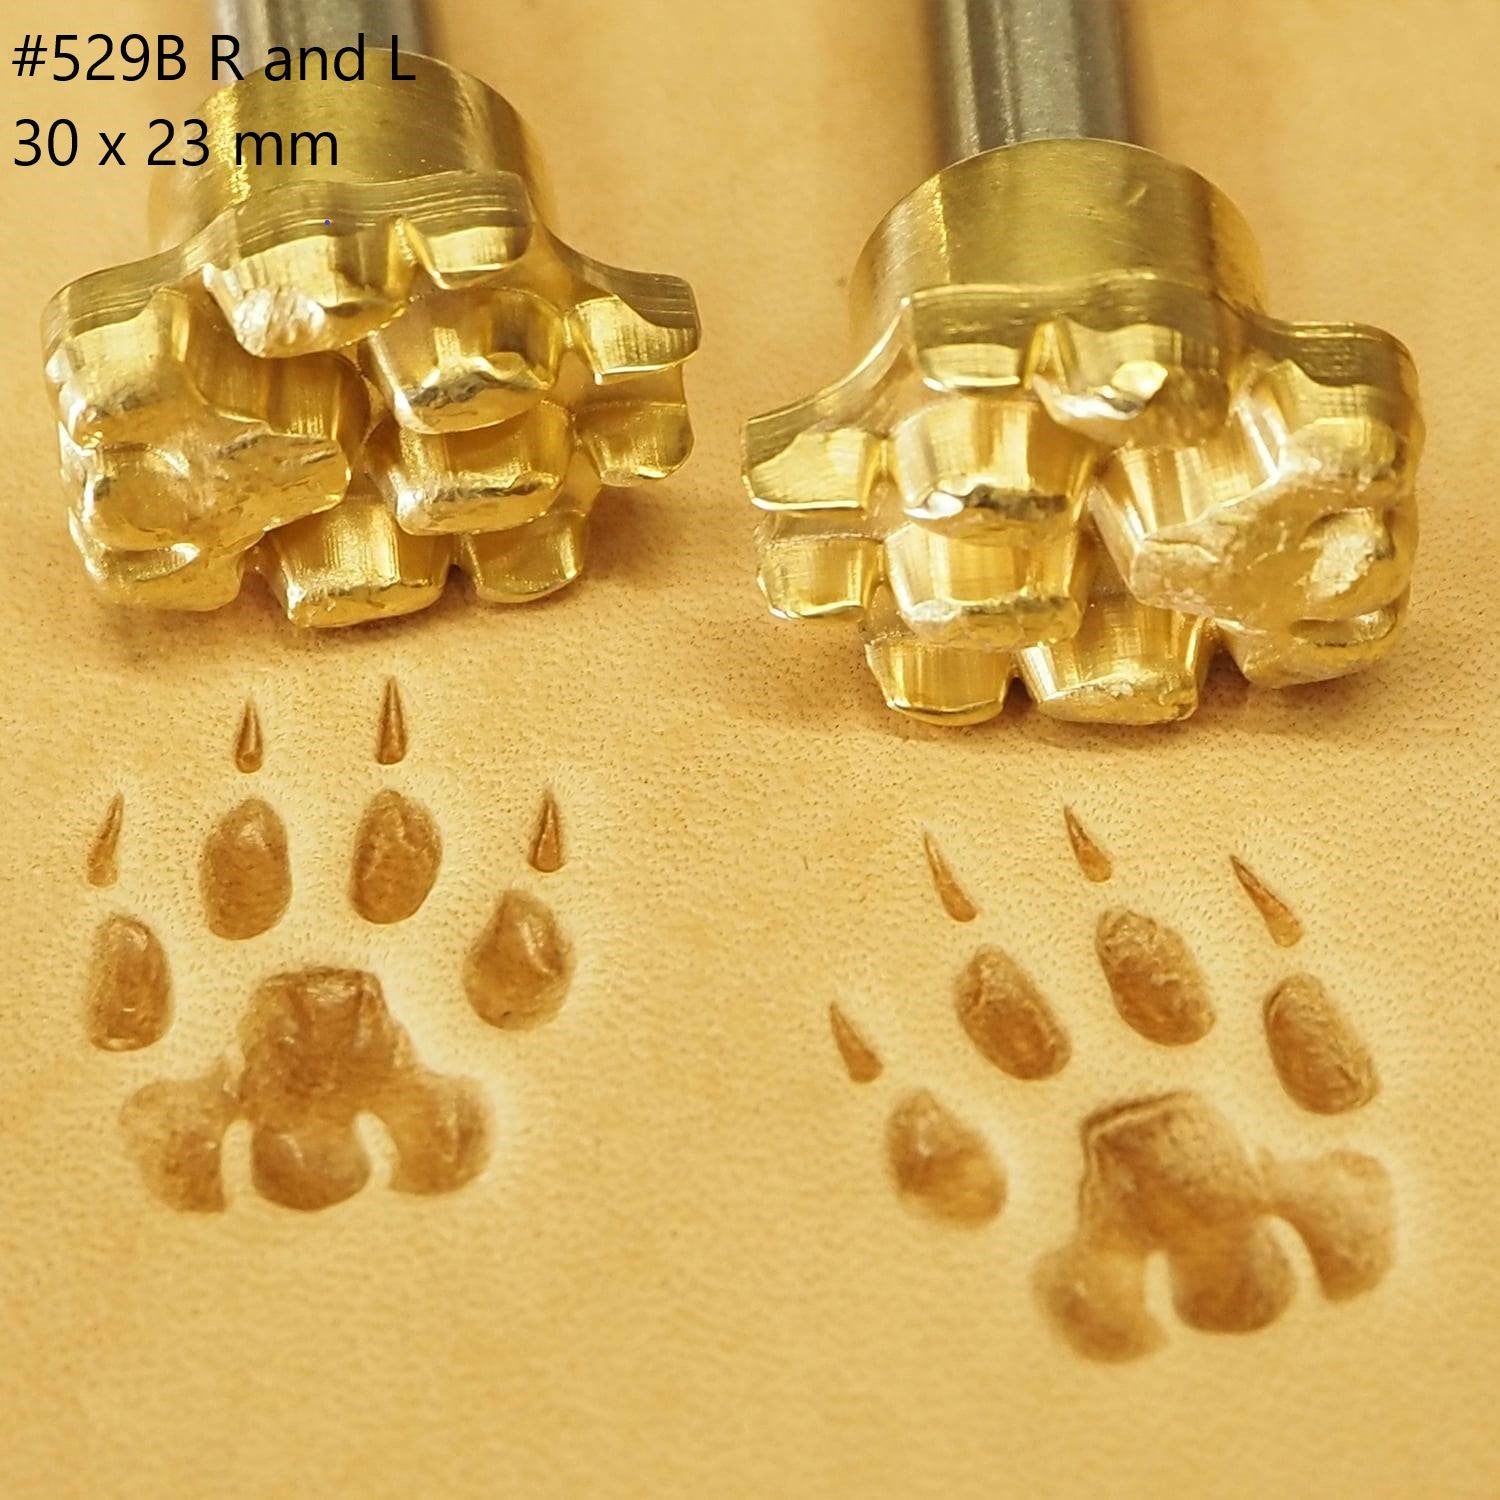 Leather Craft Stamp Tool #529B Kit